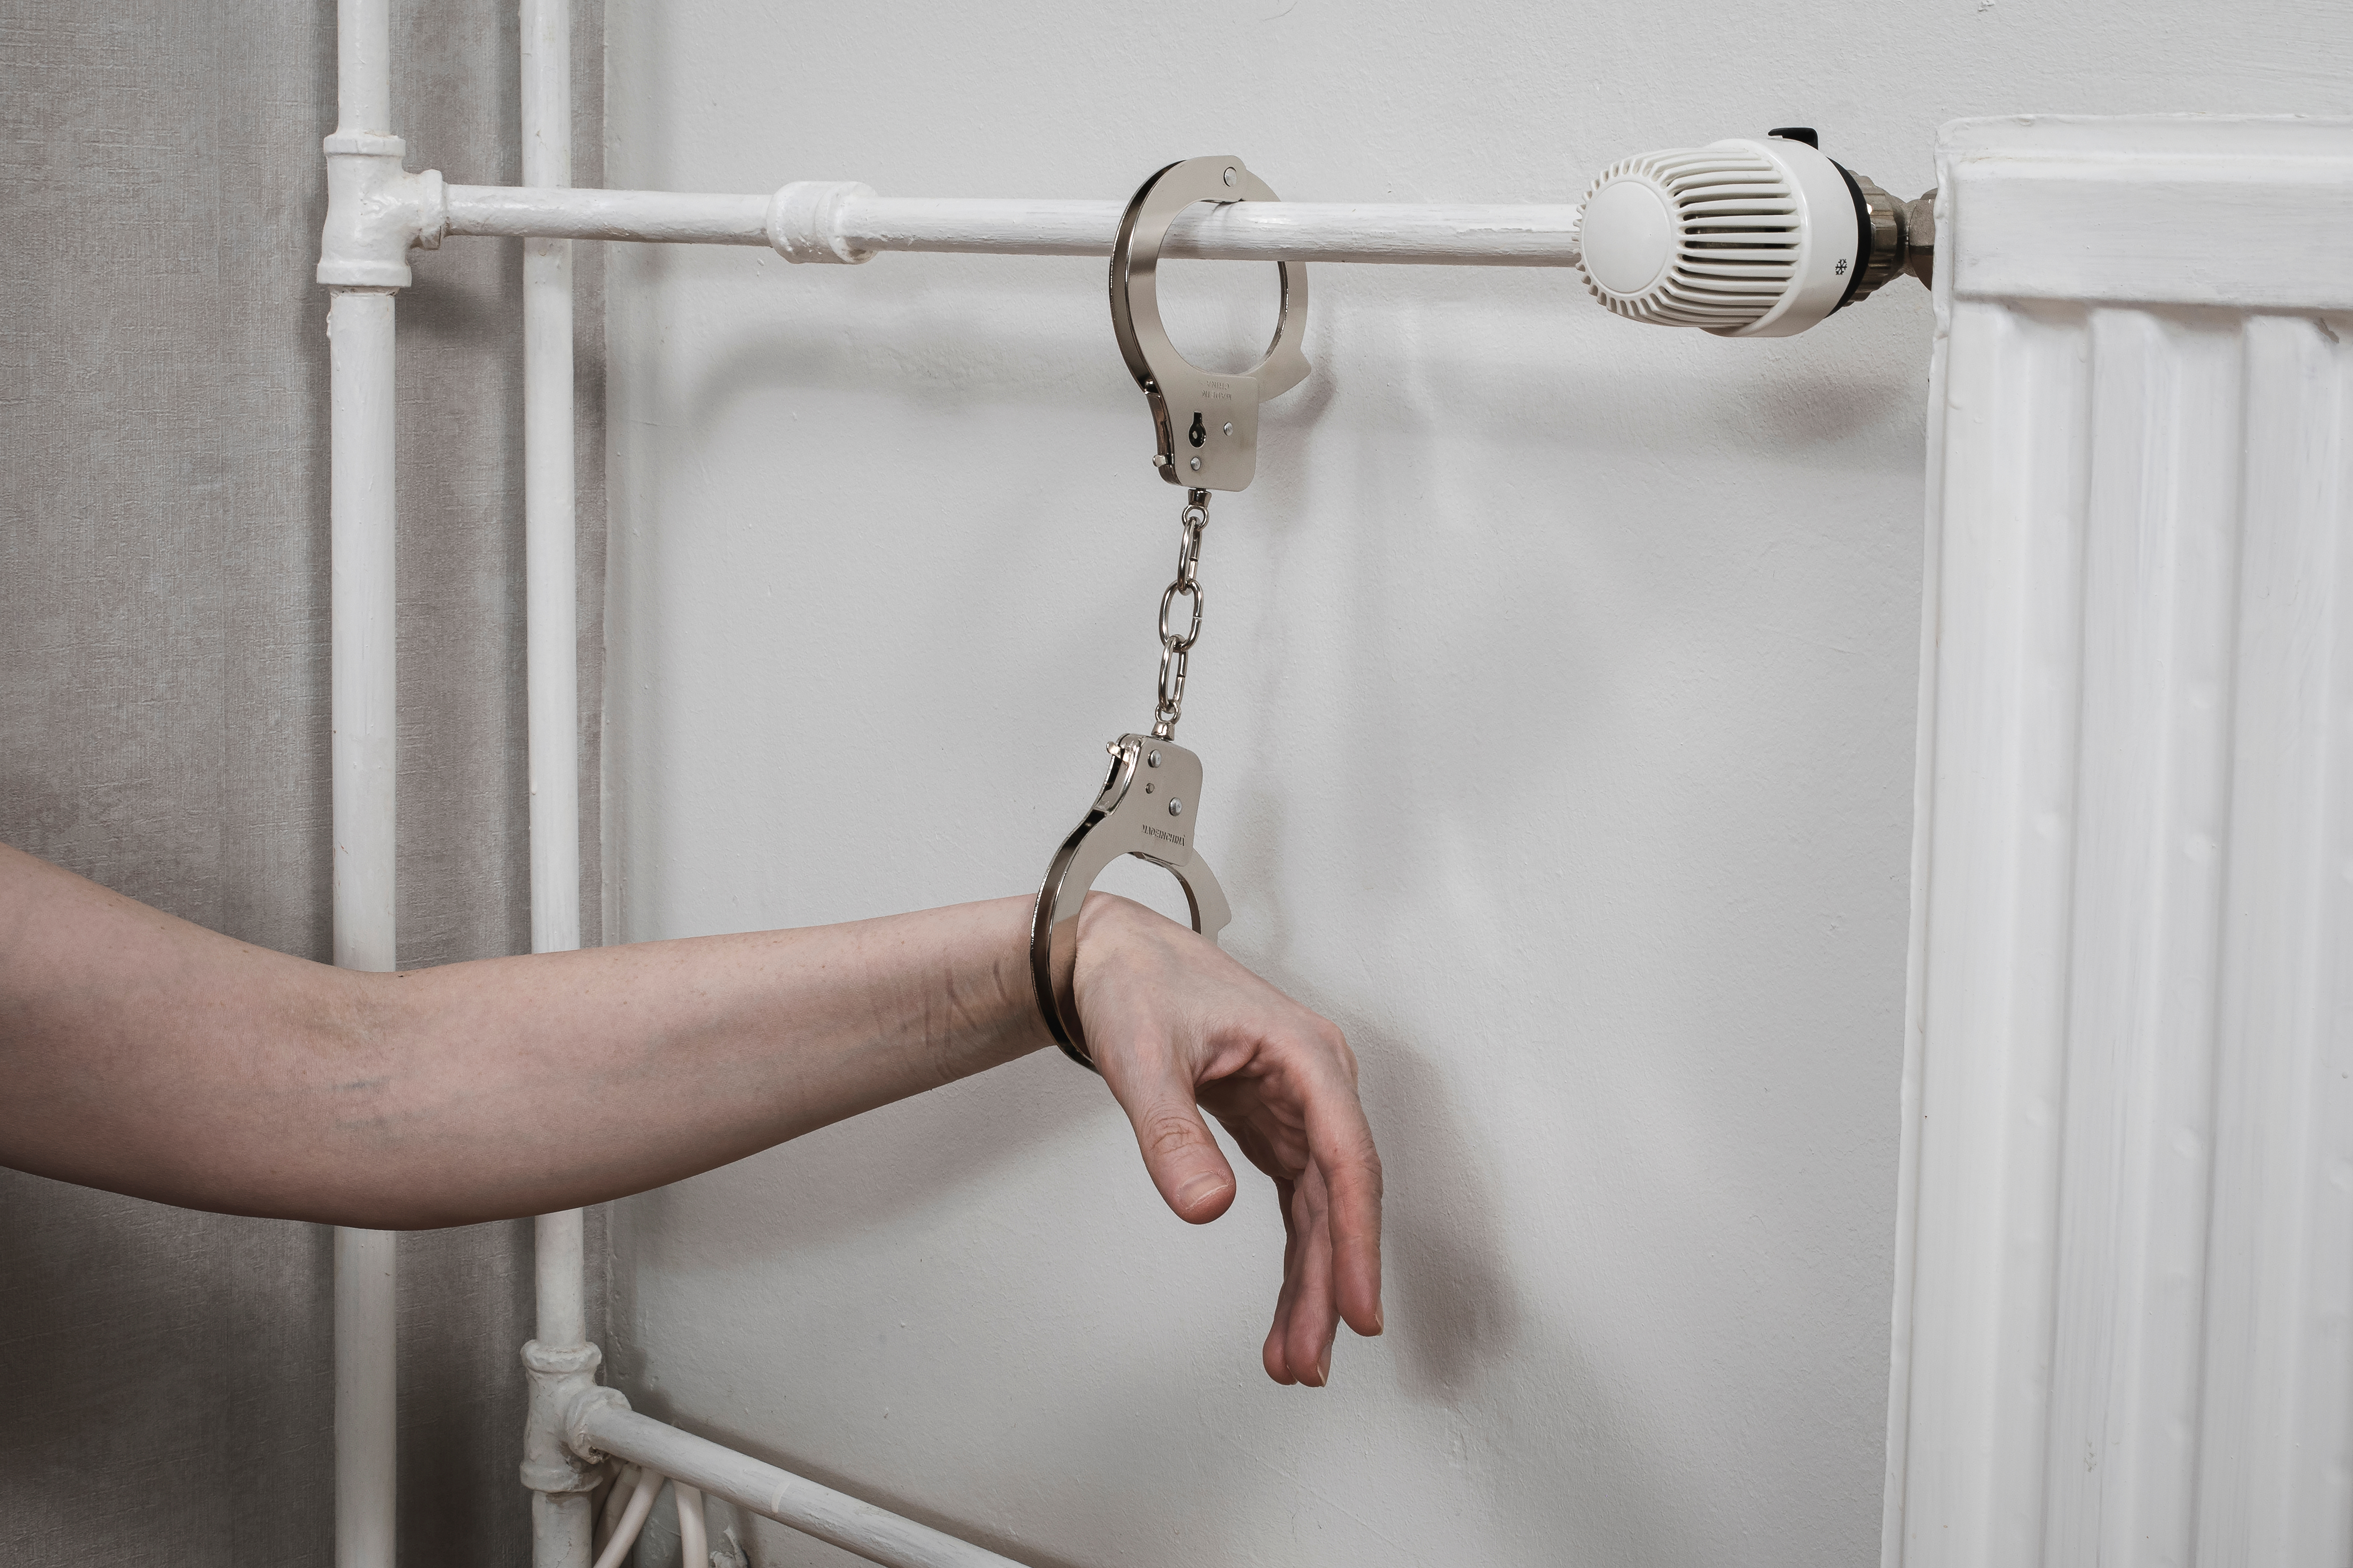 Handcuffs on the hand | Source: Shutterstock